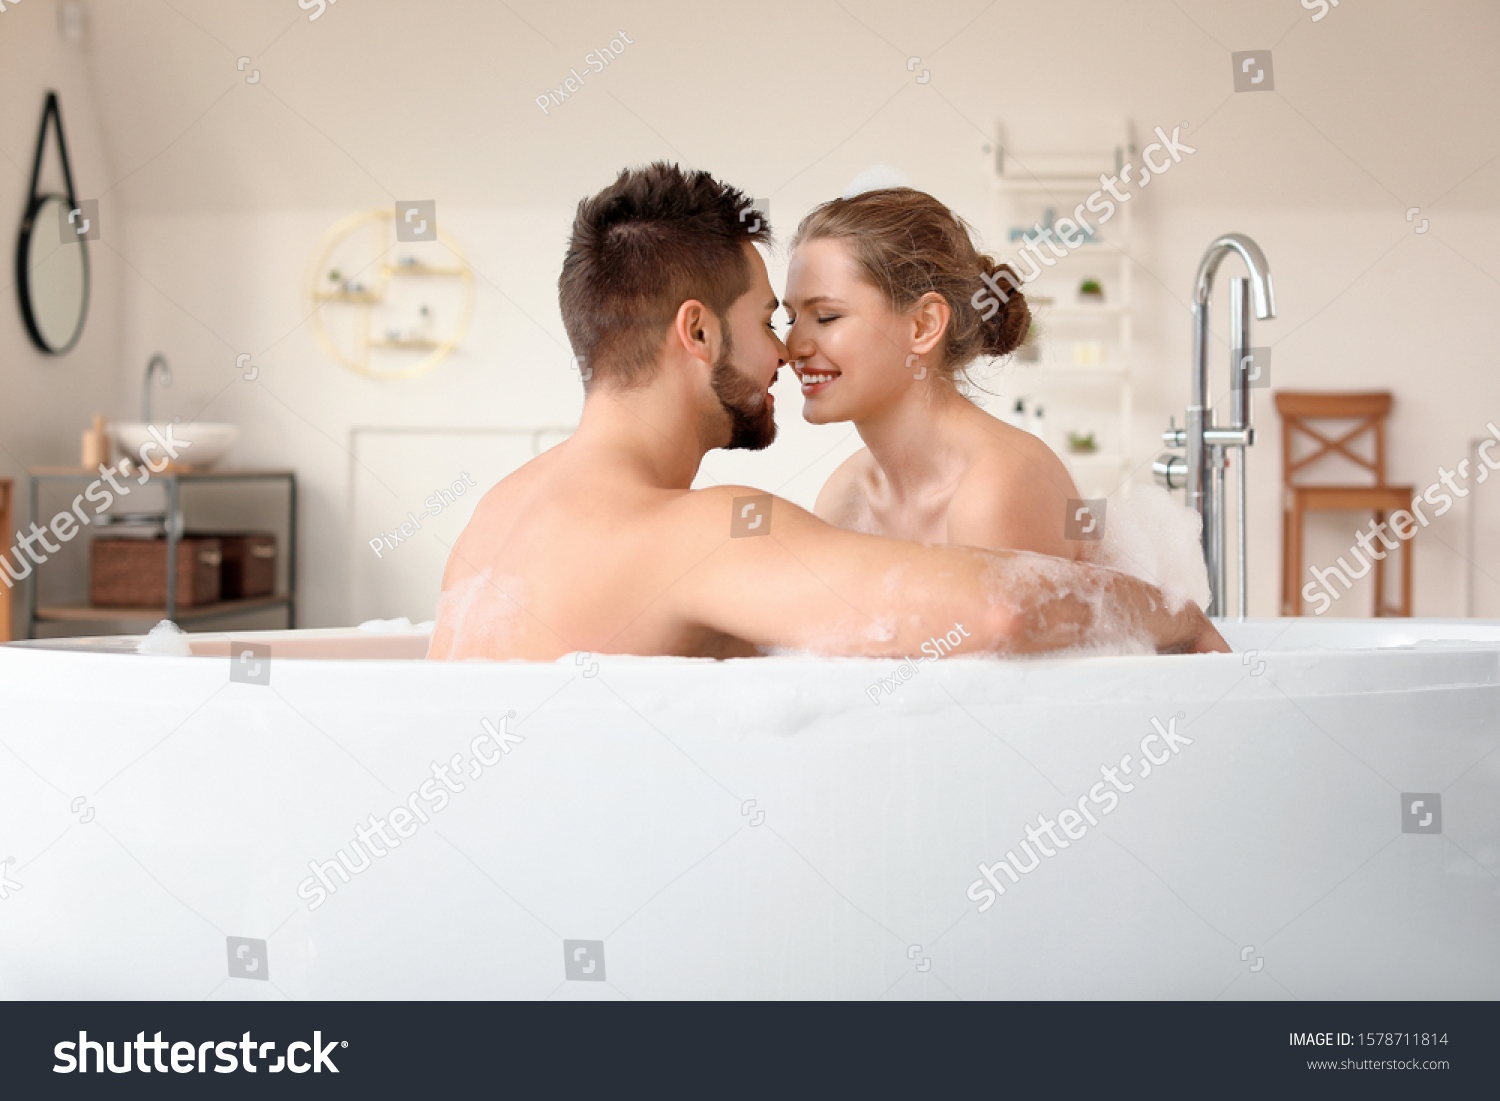 carol kendi share couples taking bath together photos